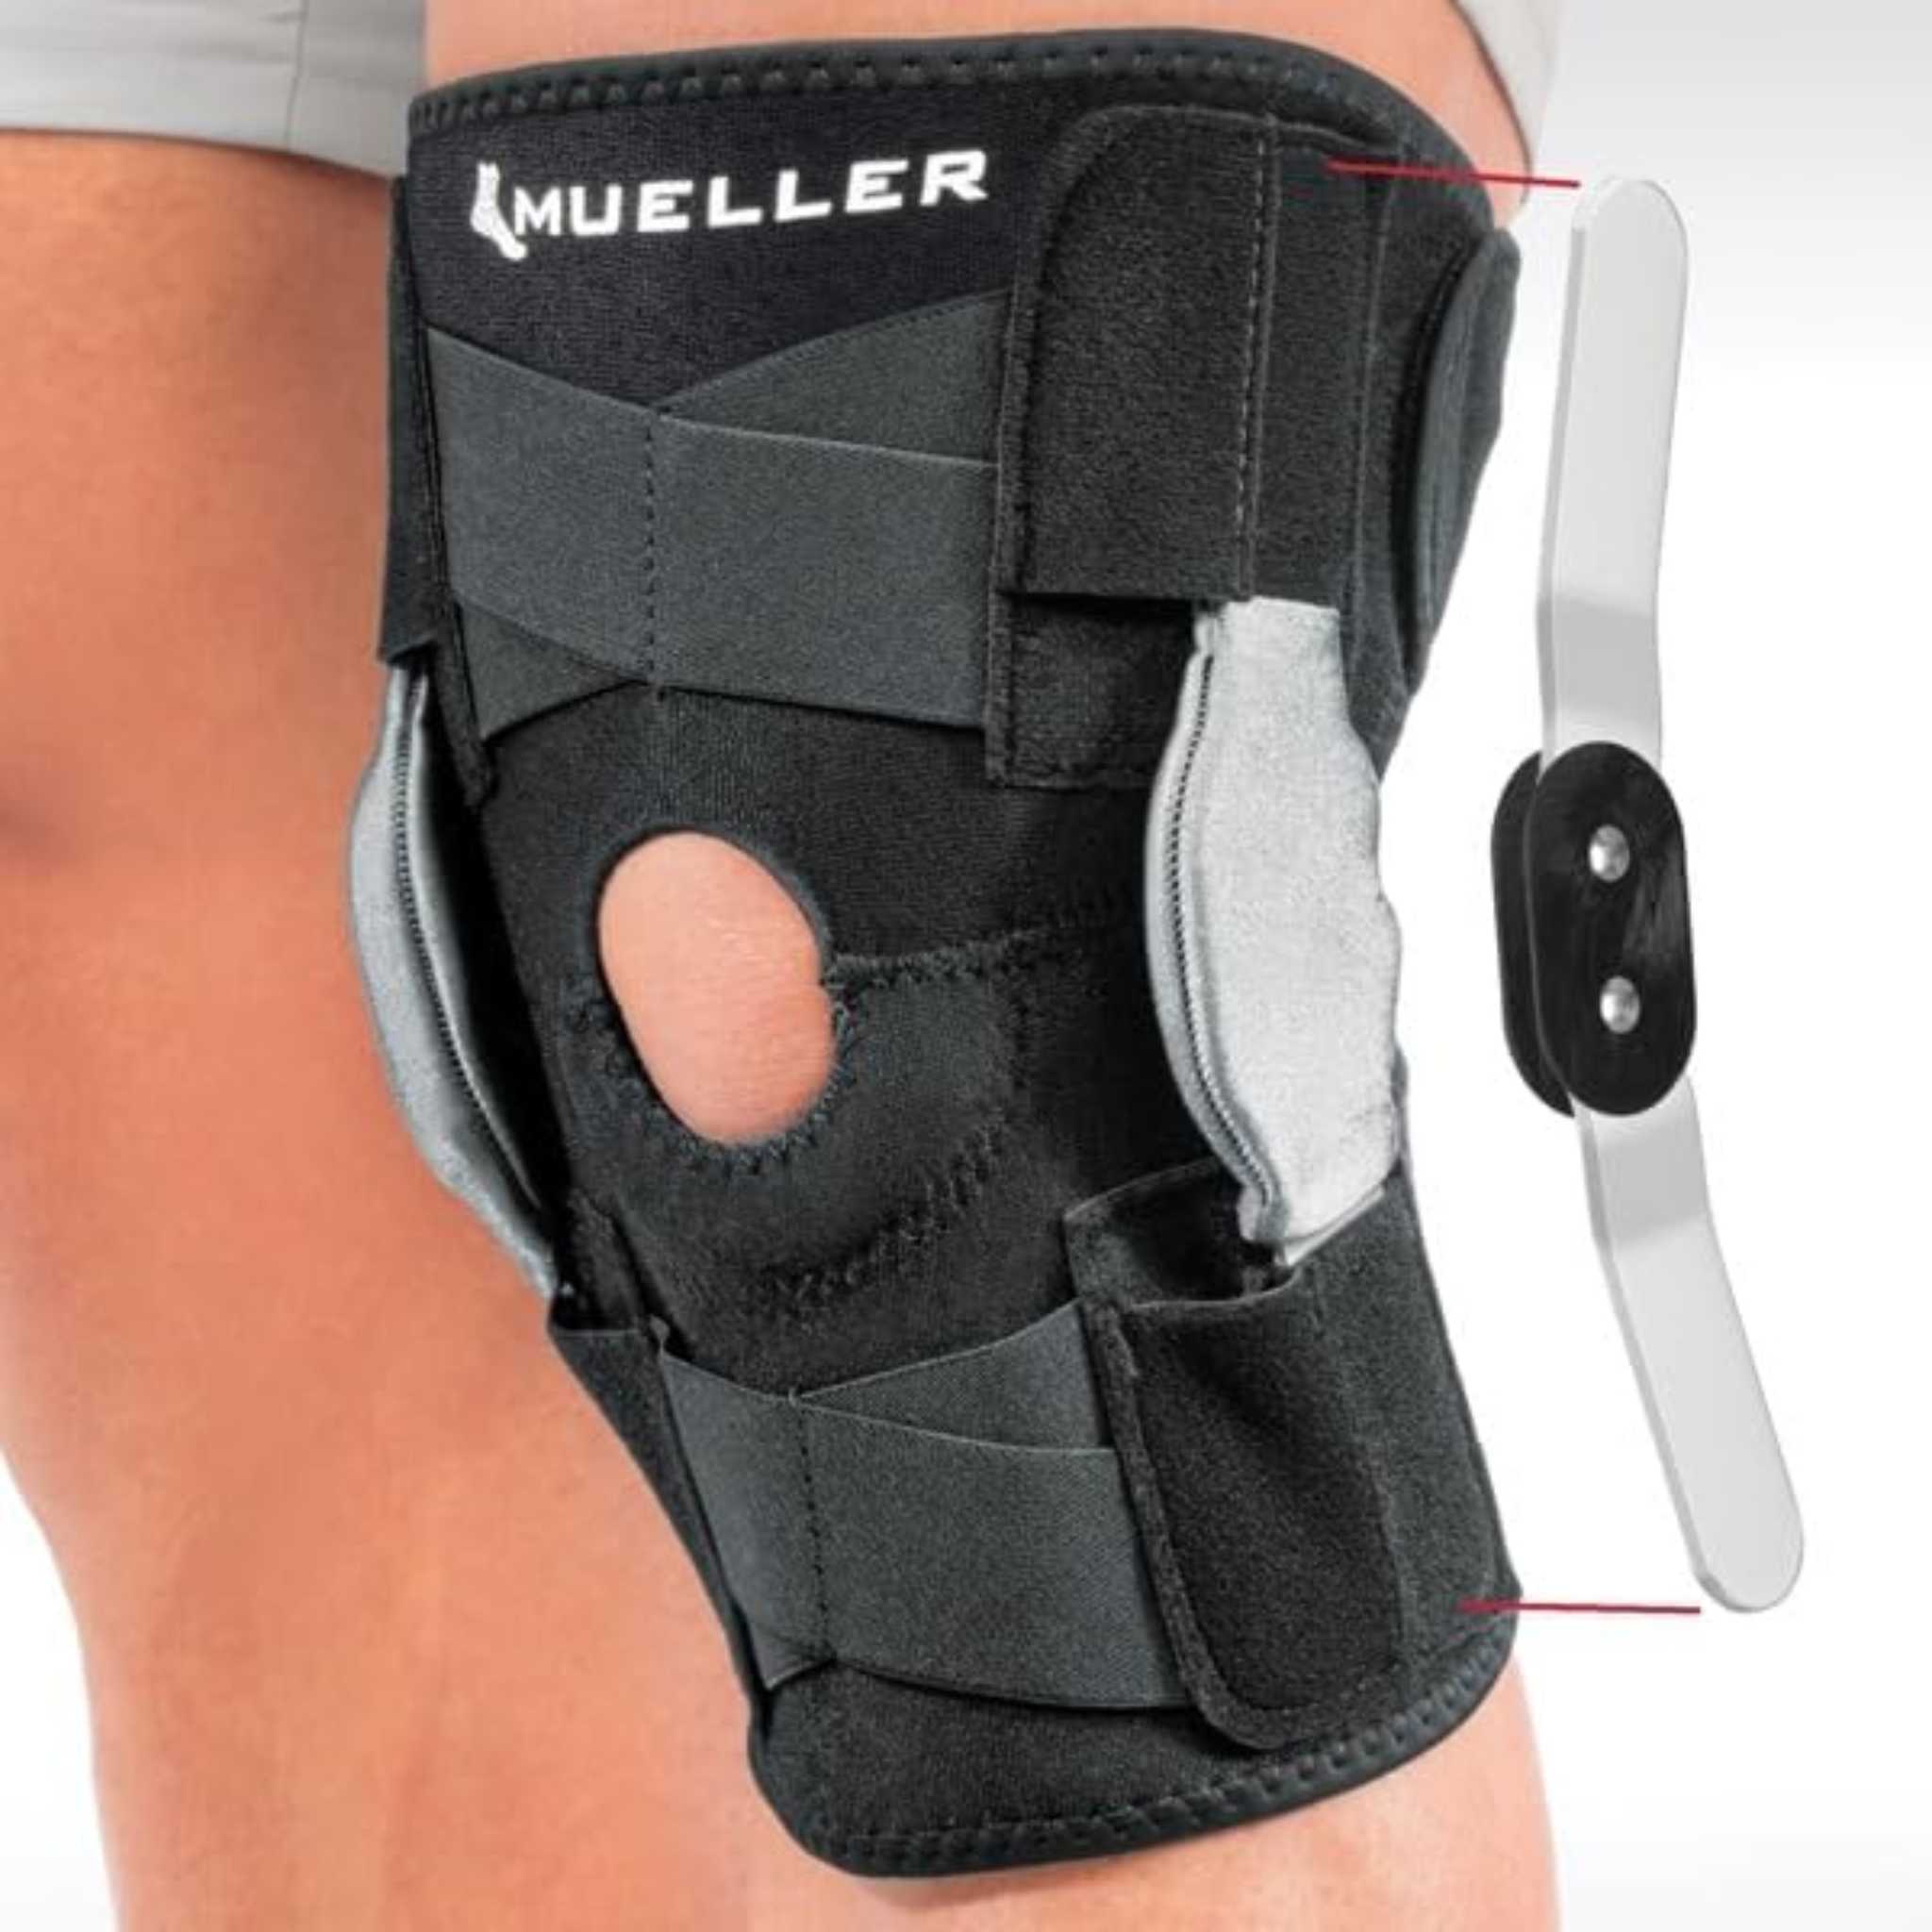 Mueller® Green Self-Adjusting Hinged Knee Brace, Unisex, One Size Fits Most - Black